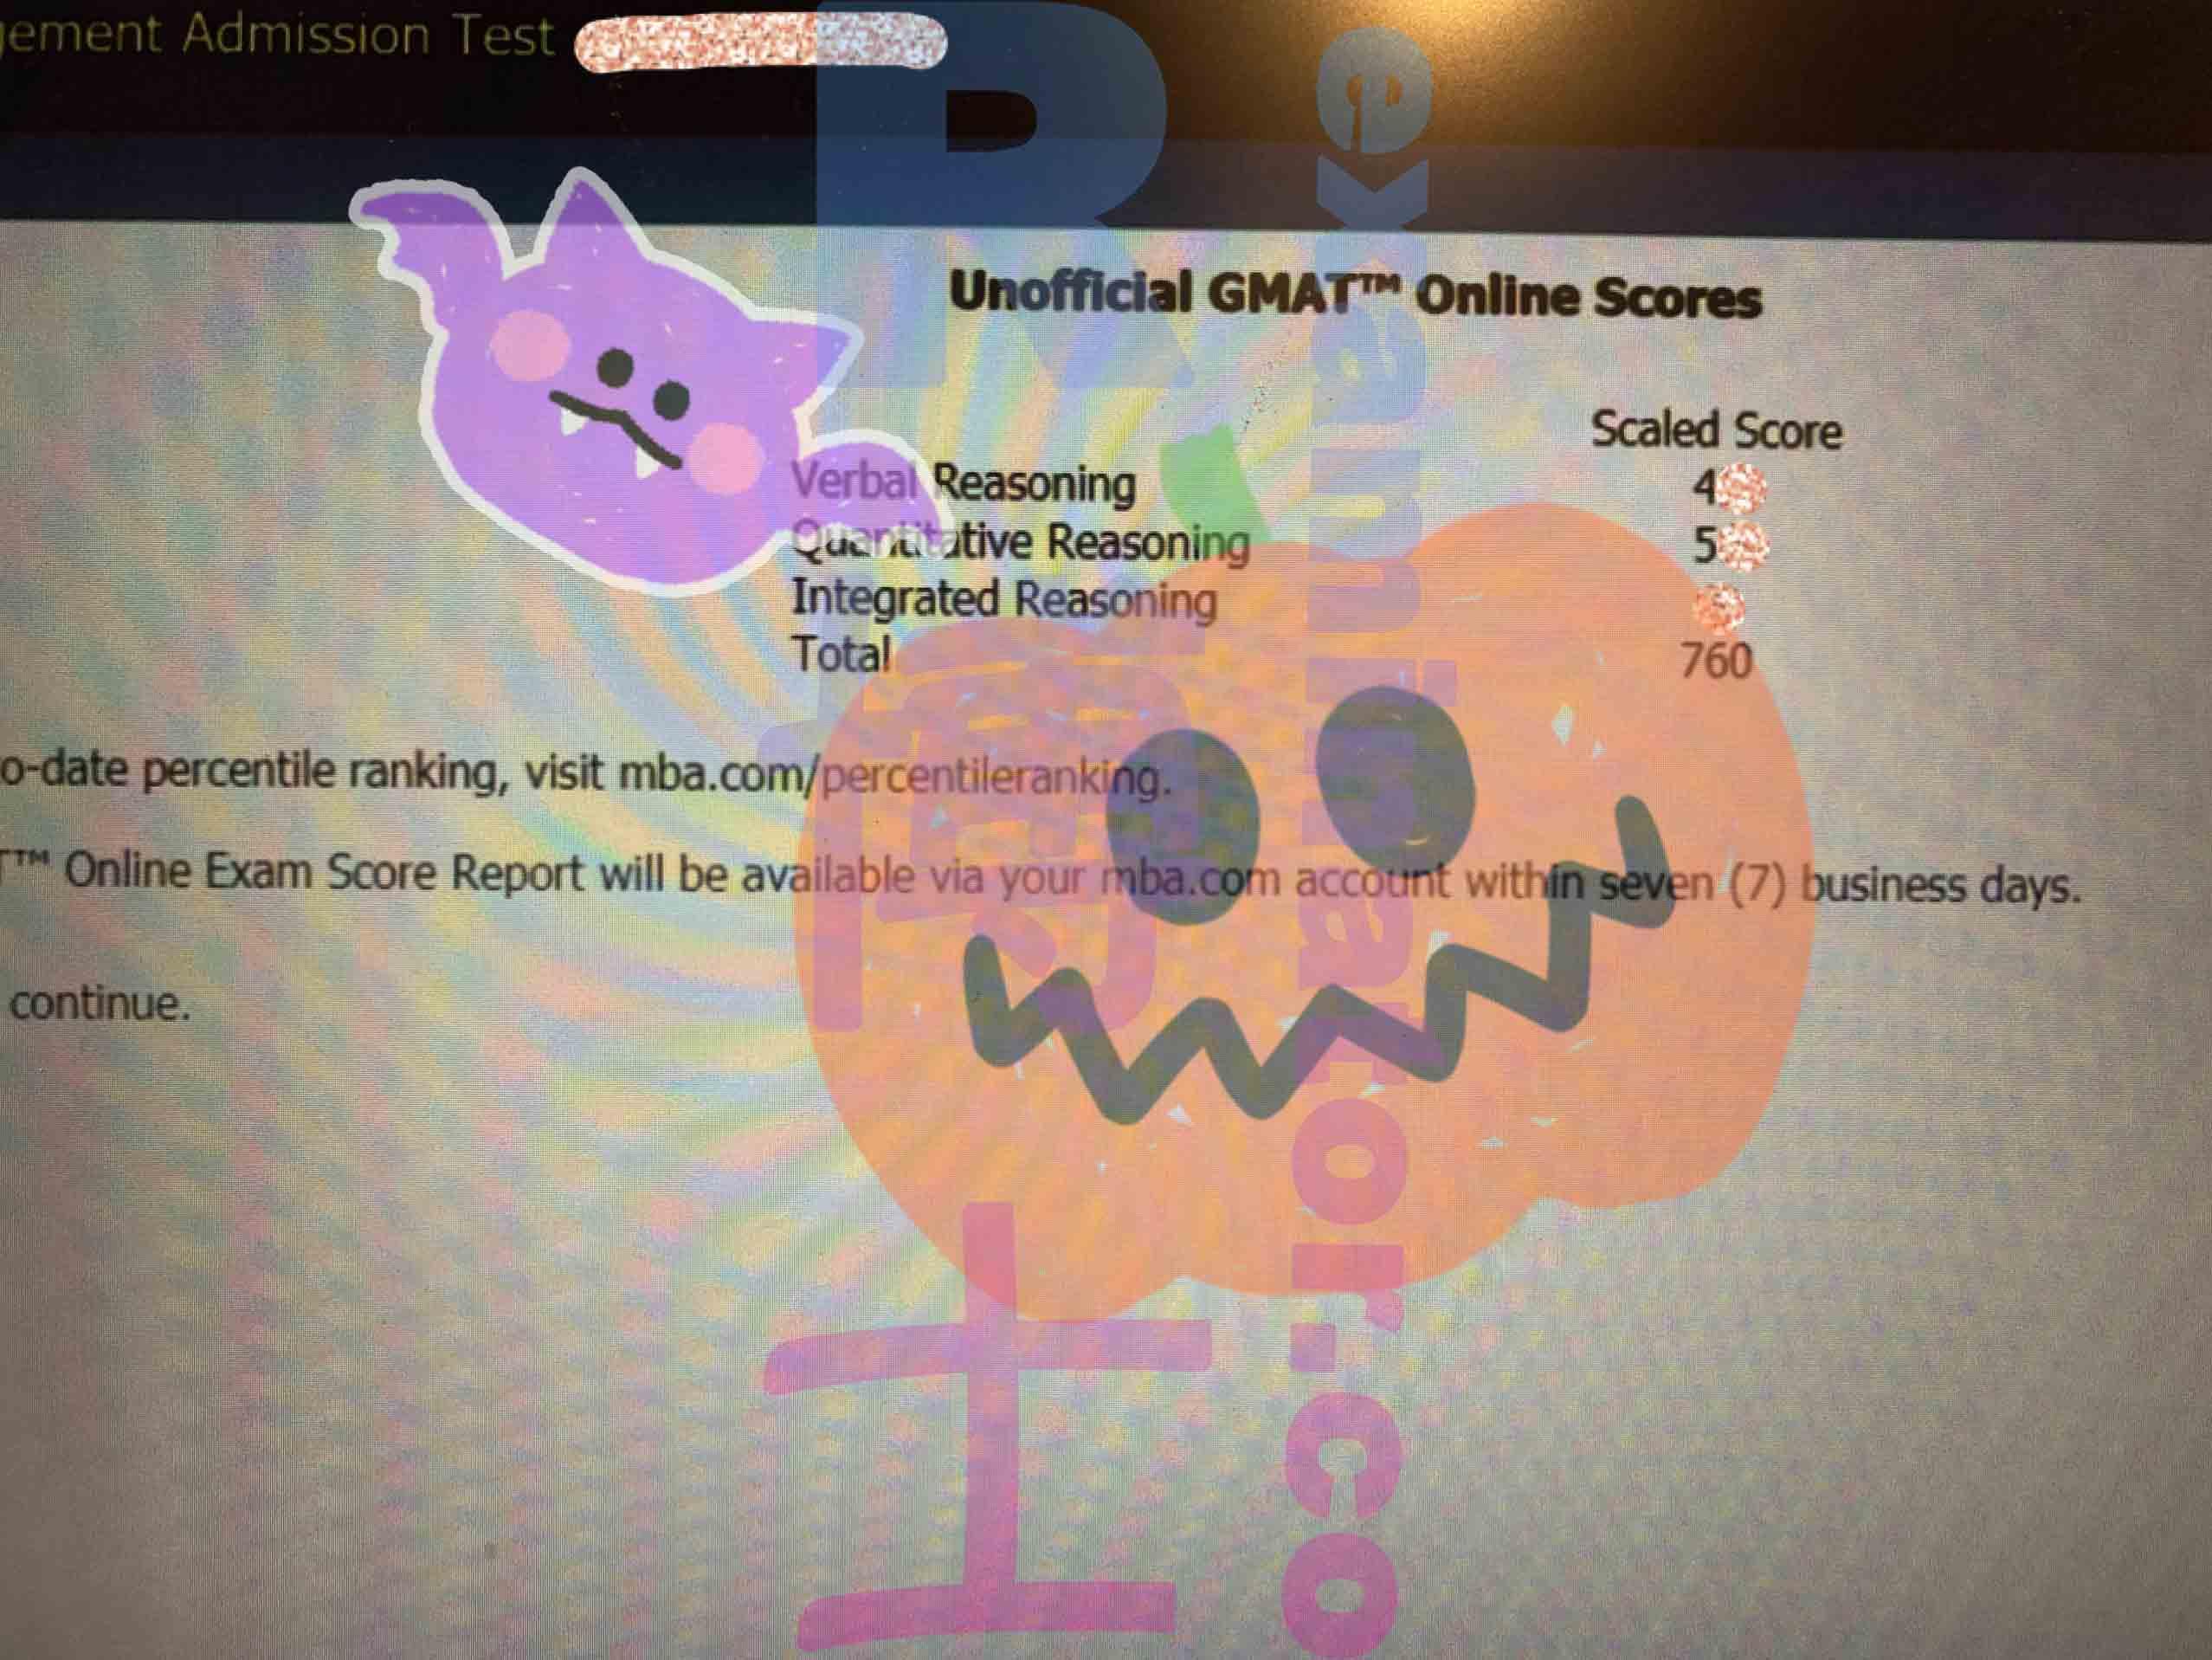 score image for GMAT Proxy Testing success story #214